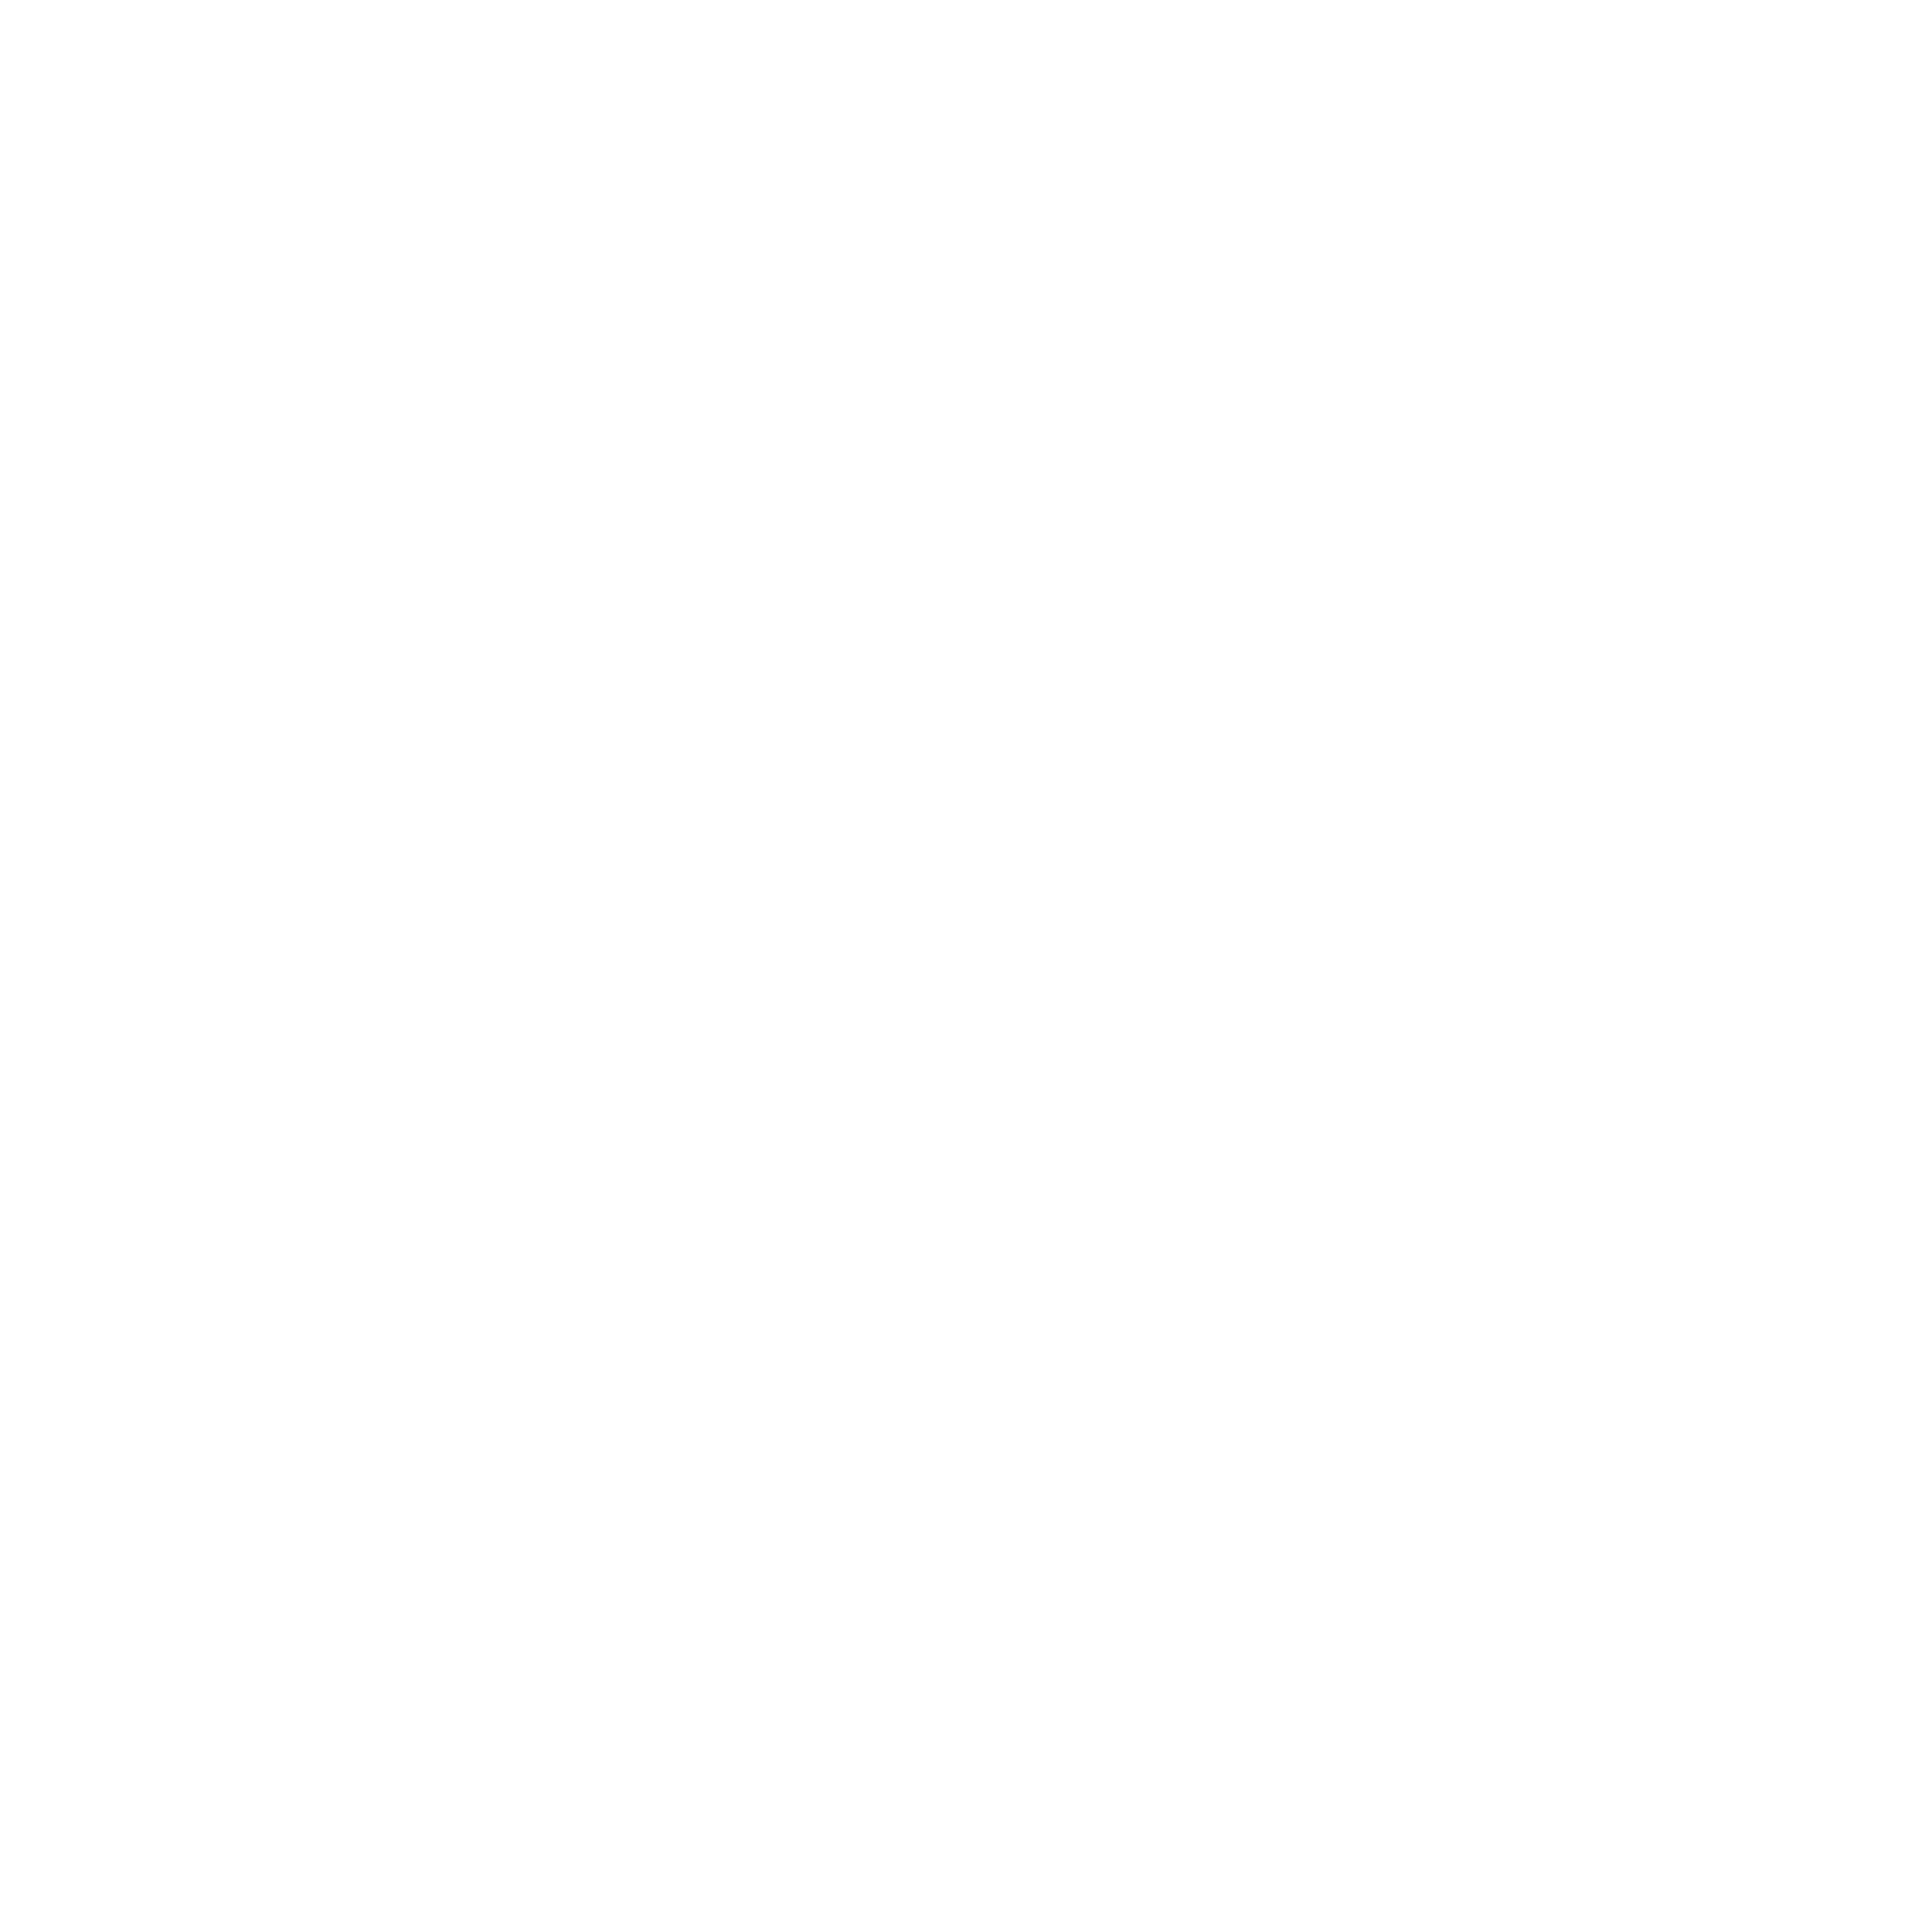 SEED Application for Grants & Scholarships - SMART Scholarship